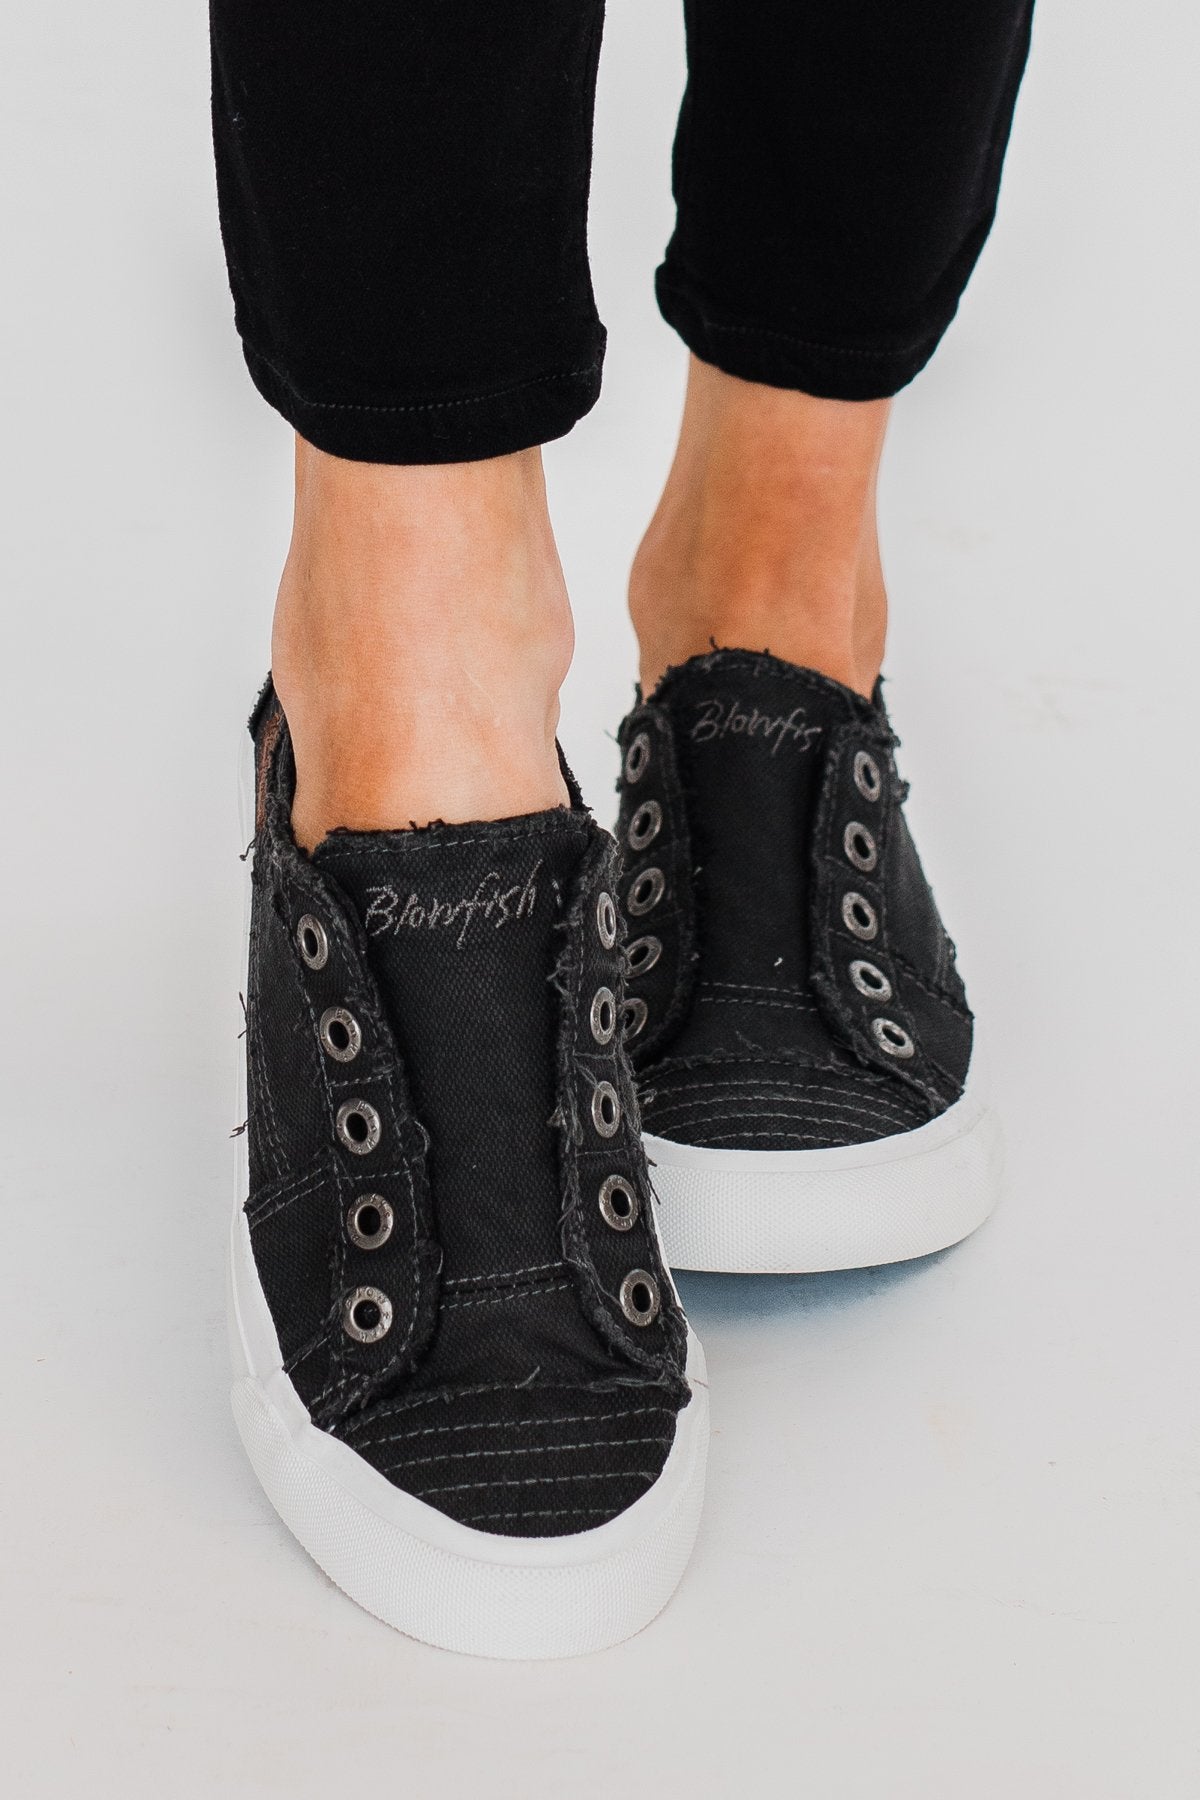 blowfish black shoes